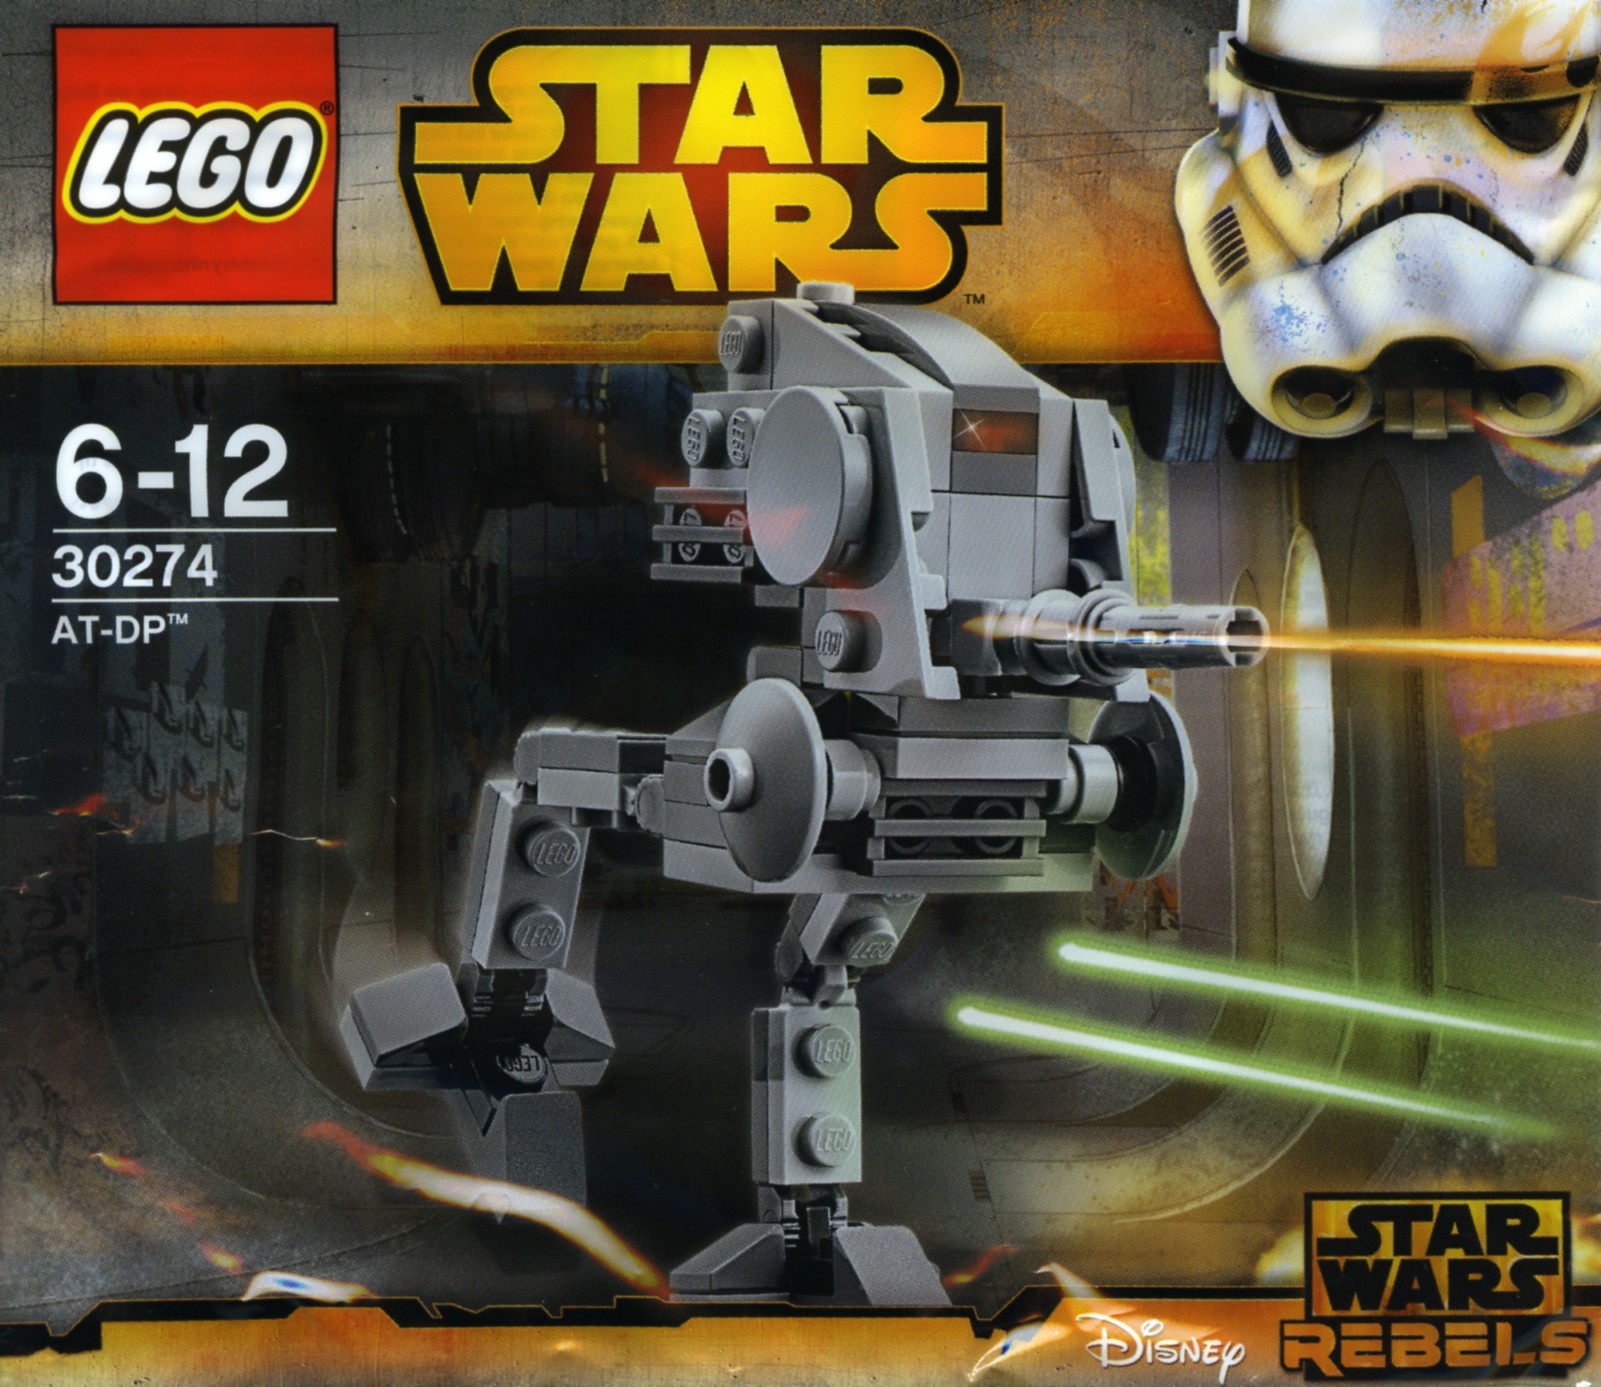 LEGO Star Wars Rebels | Brickset